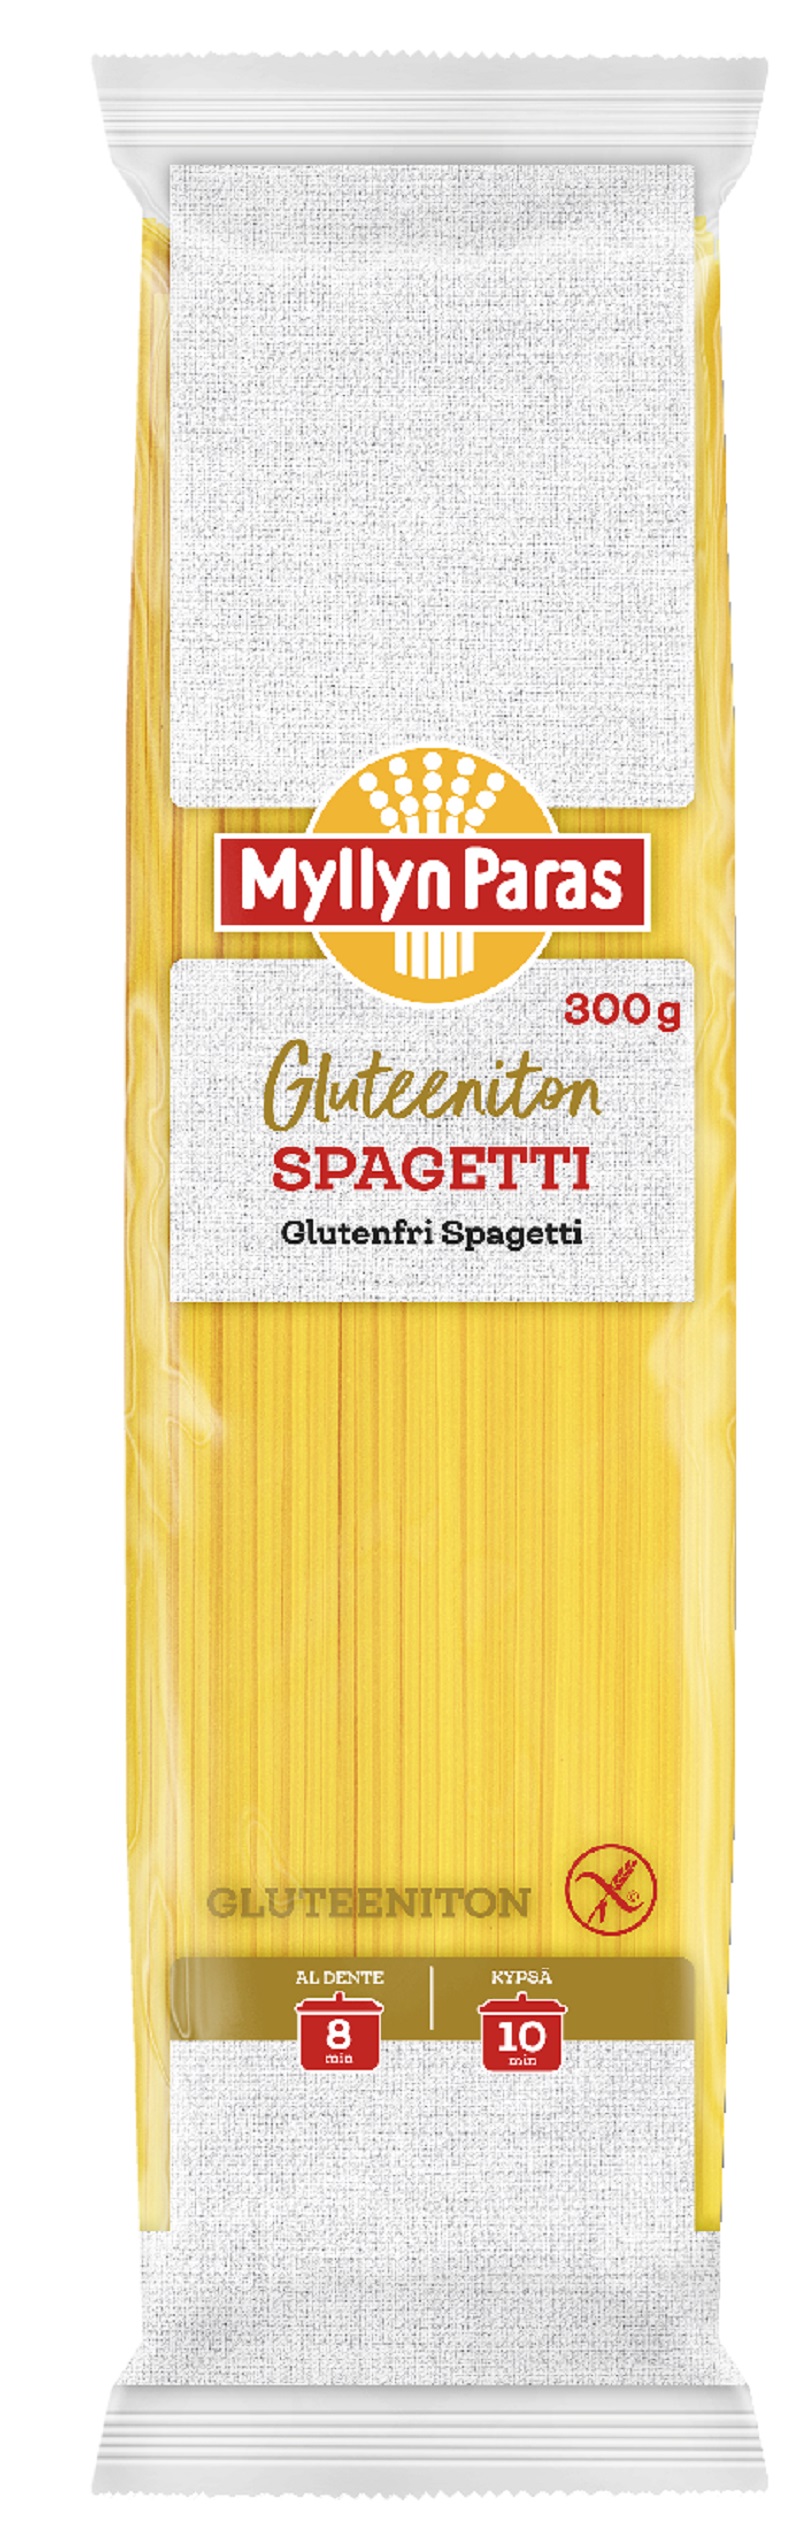 Myllyn Paras Spagetti 300g (Gluten-free)